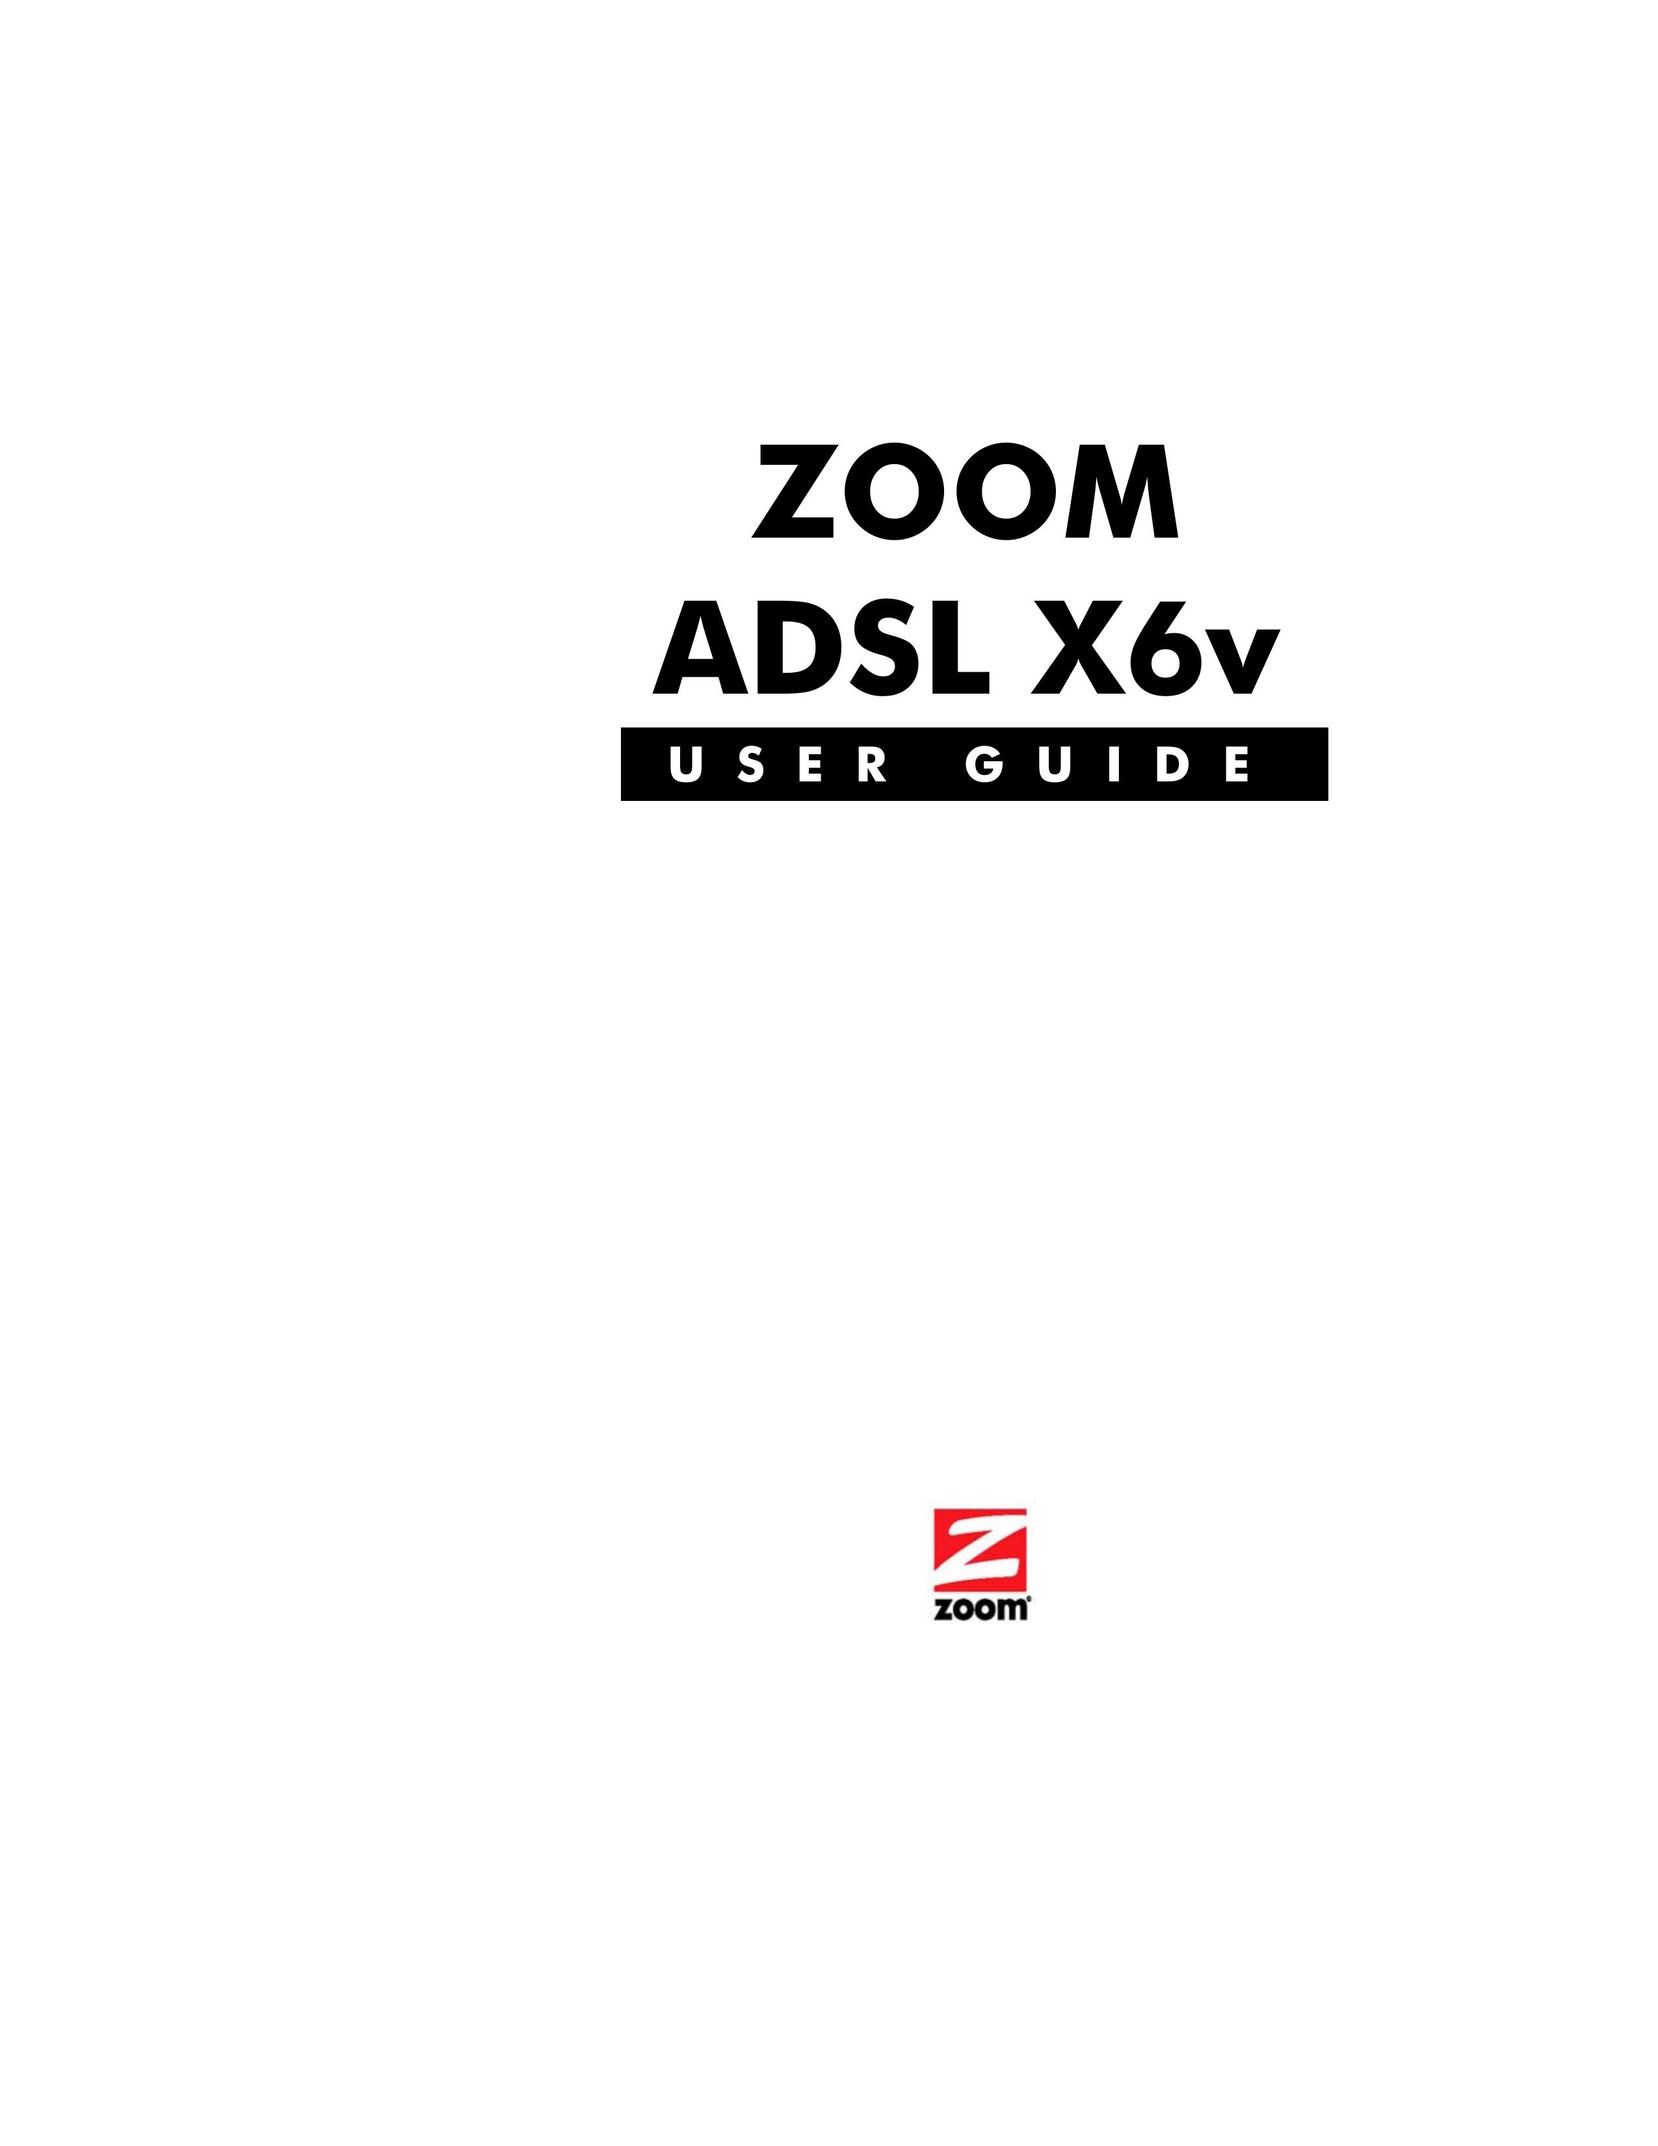 Zoom 5695 Modem User Manual